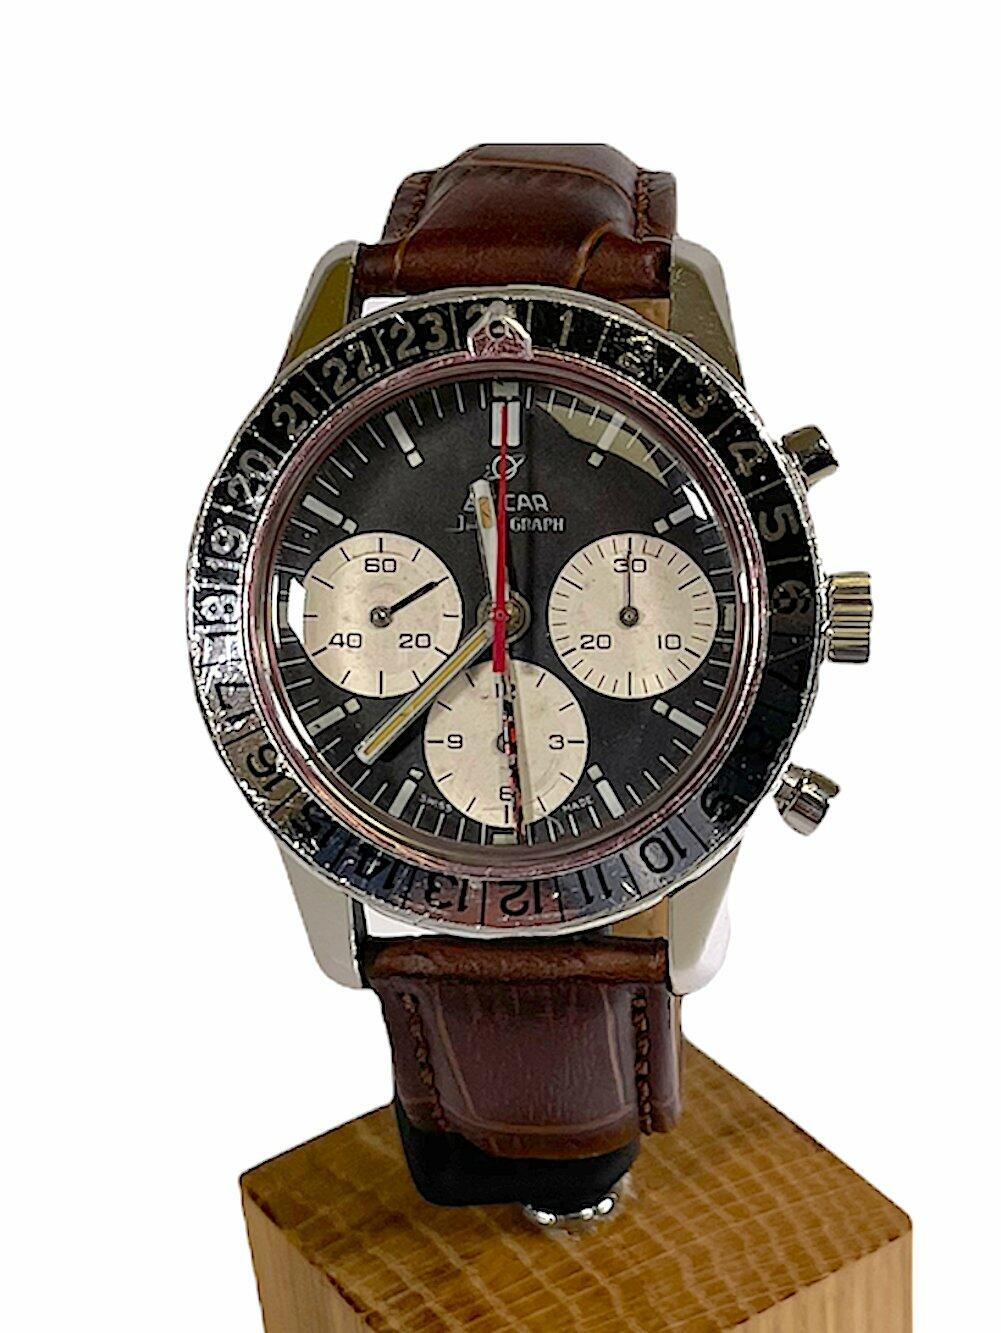 Enicar Jet Graph Sherpa 300 Vajoux 72 Ref 072-02-02 - The Classic Watch Buyers Club Ltd